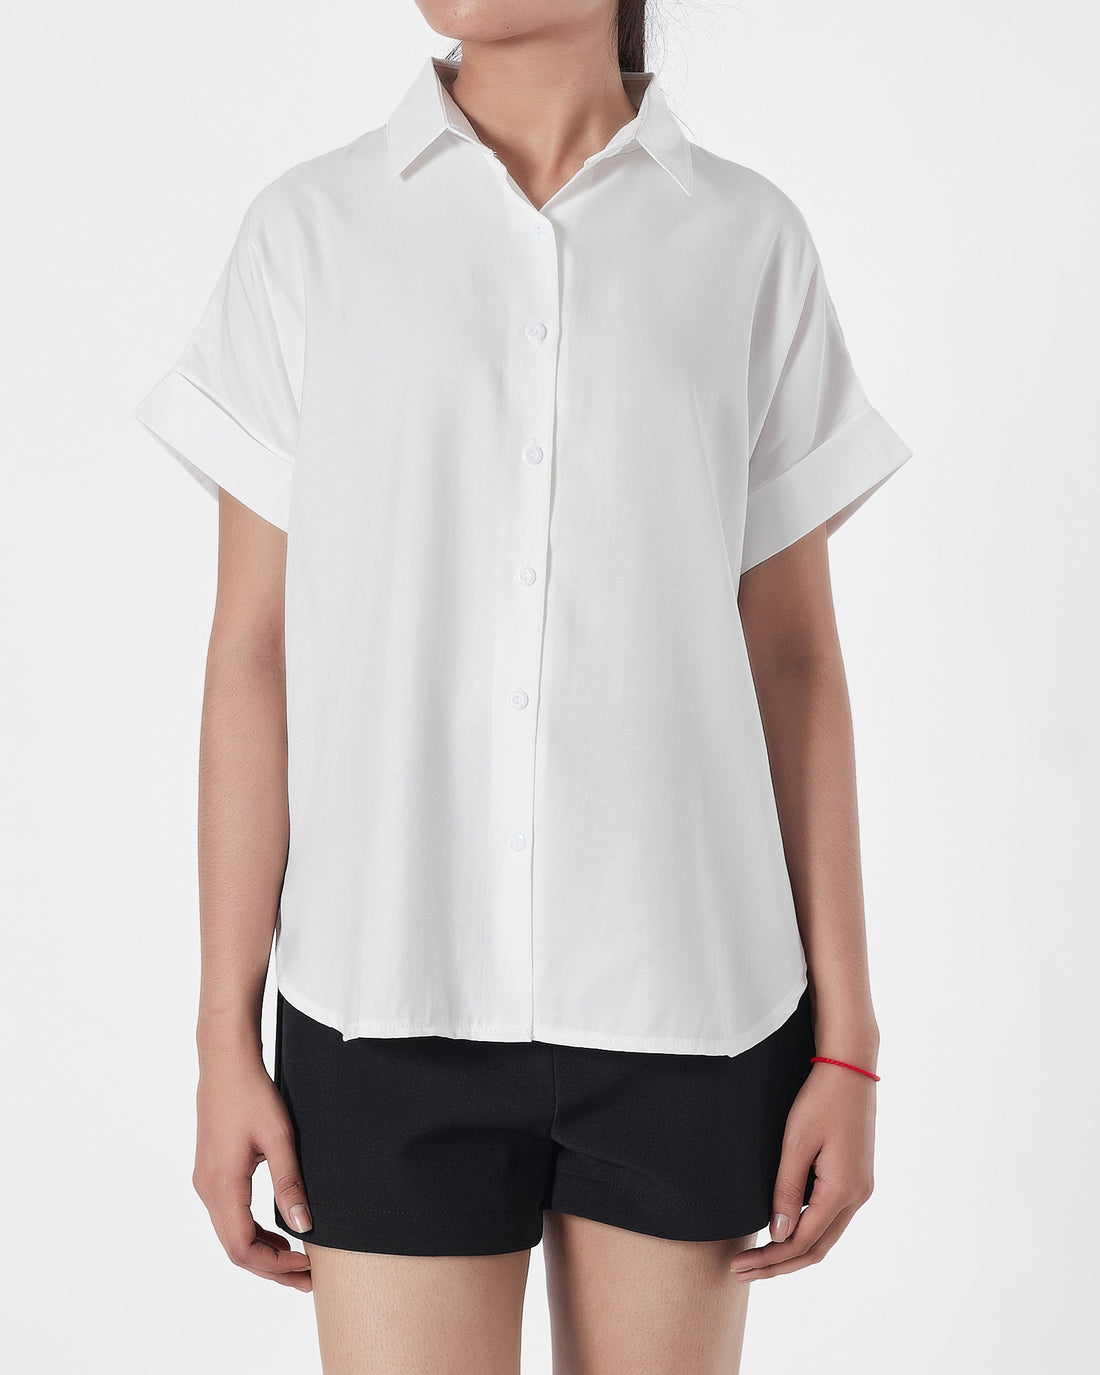 Plain Color Lady White Shirts Short Sleeve 13.90